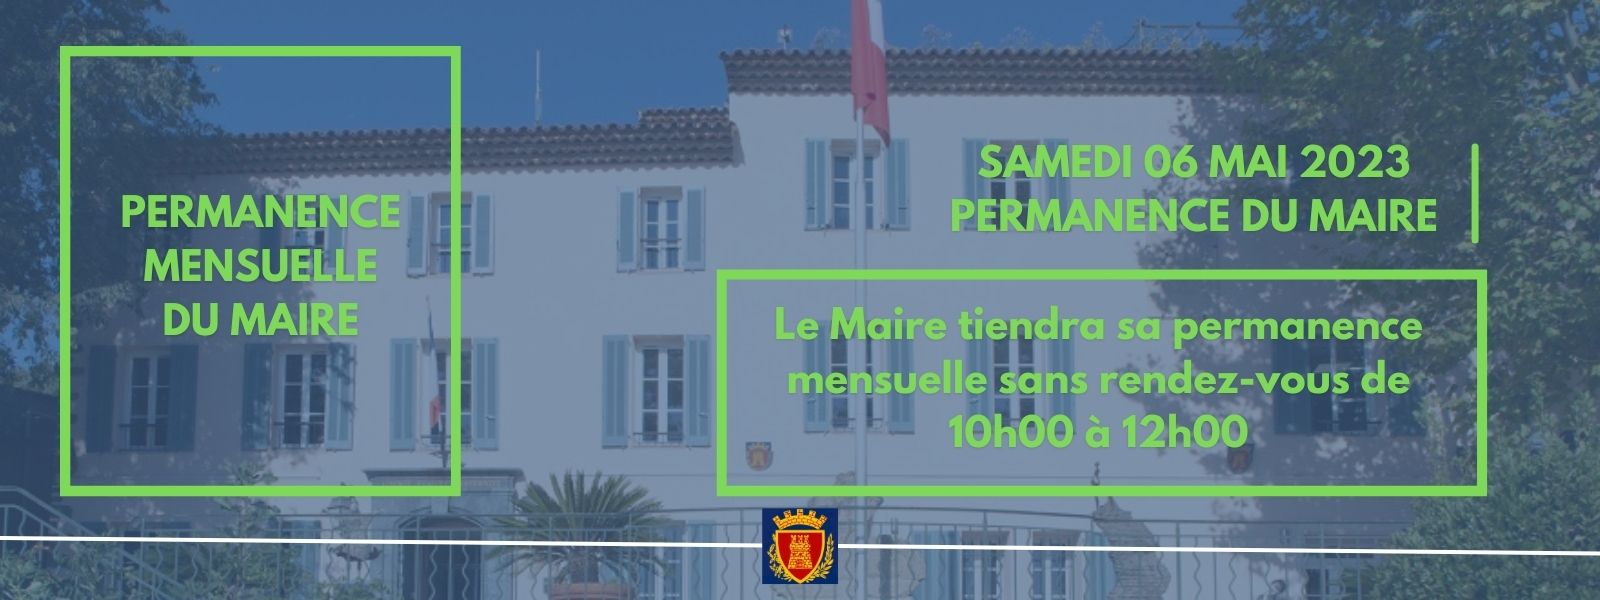 Samedi 06 mai 2023 : permanence mensuelle du Maire